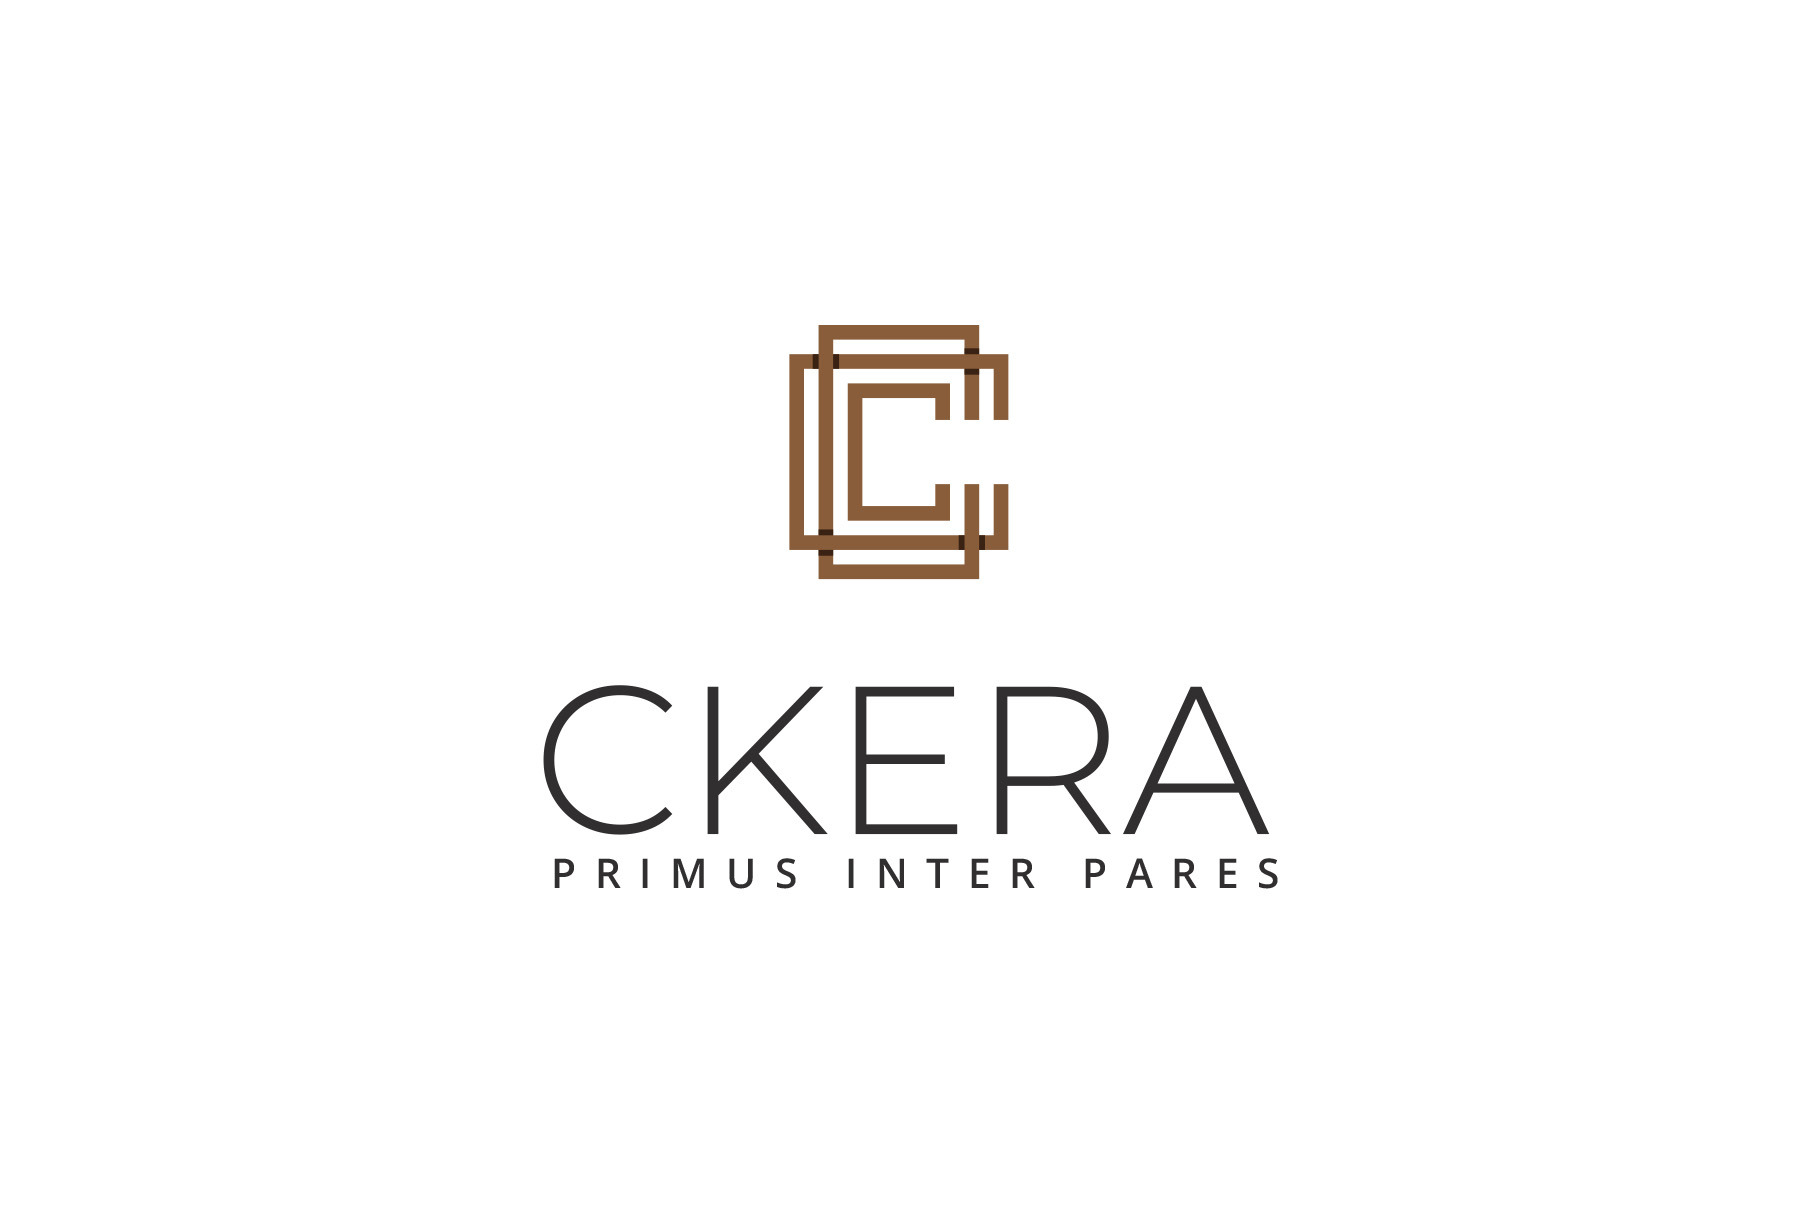 Ckera Letter C Logo Template, a Branding & Logo Template by Tovarkovdesign